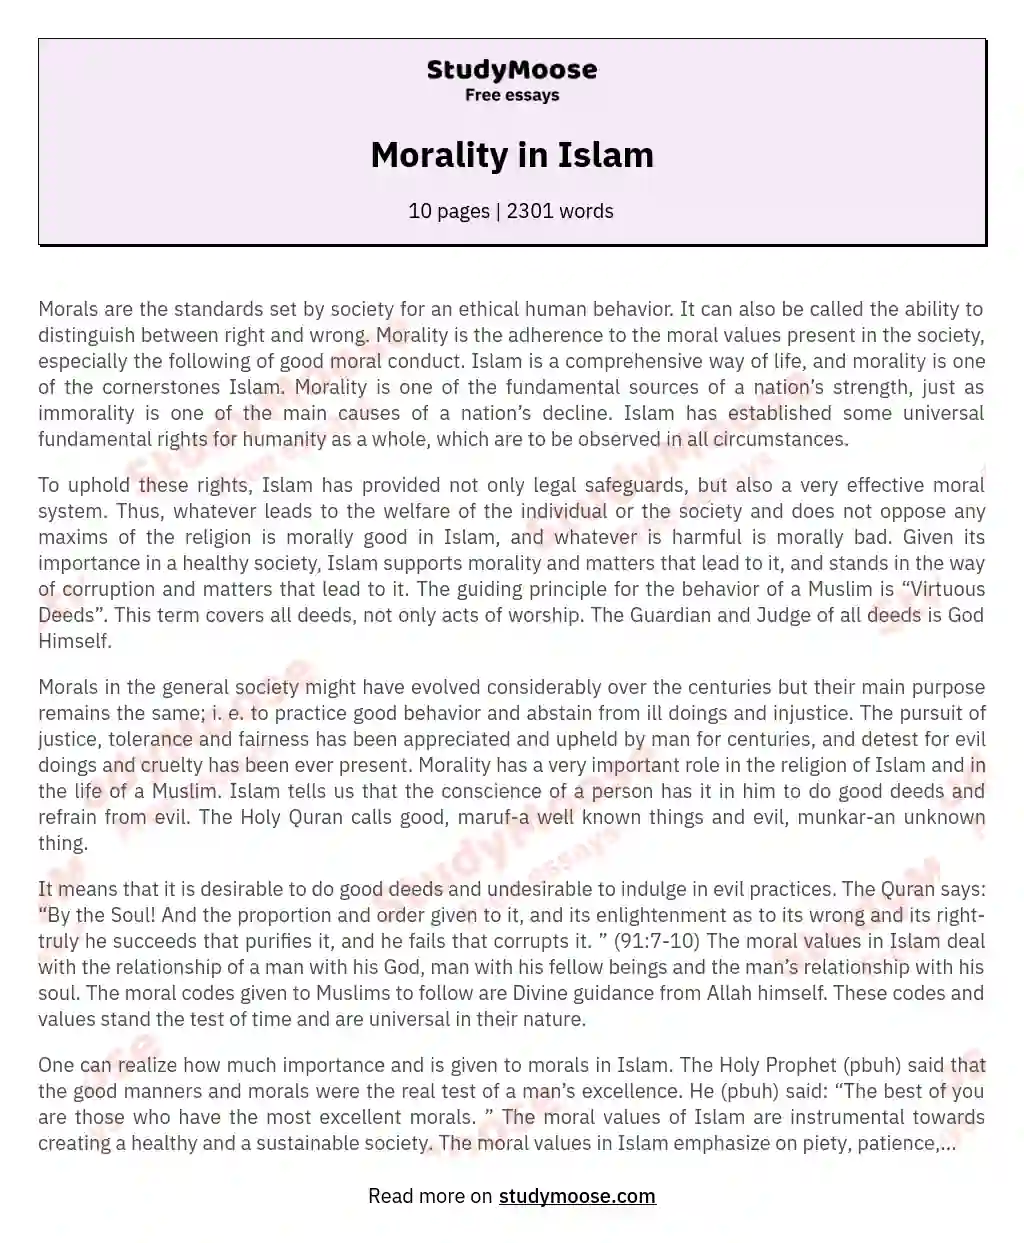 Morality in Islam essay